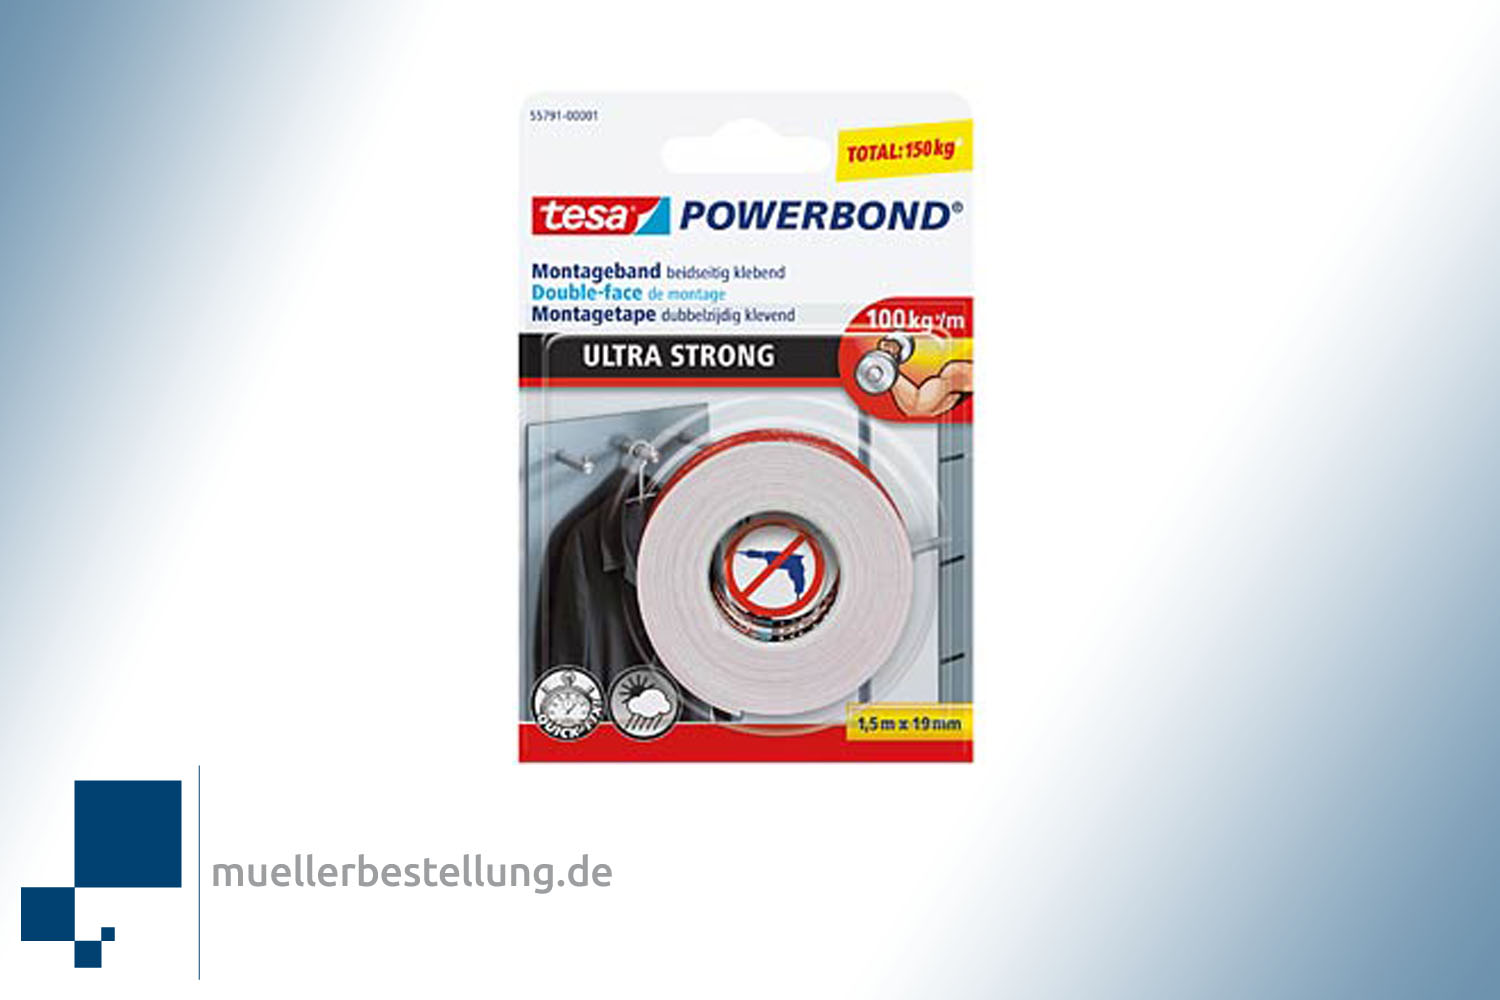 TESA 55791 монтажная лента tesa Powerbond® Ultra Strong, 1,5 м x 19 мм